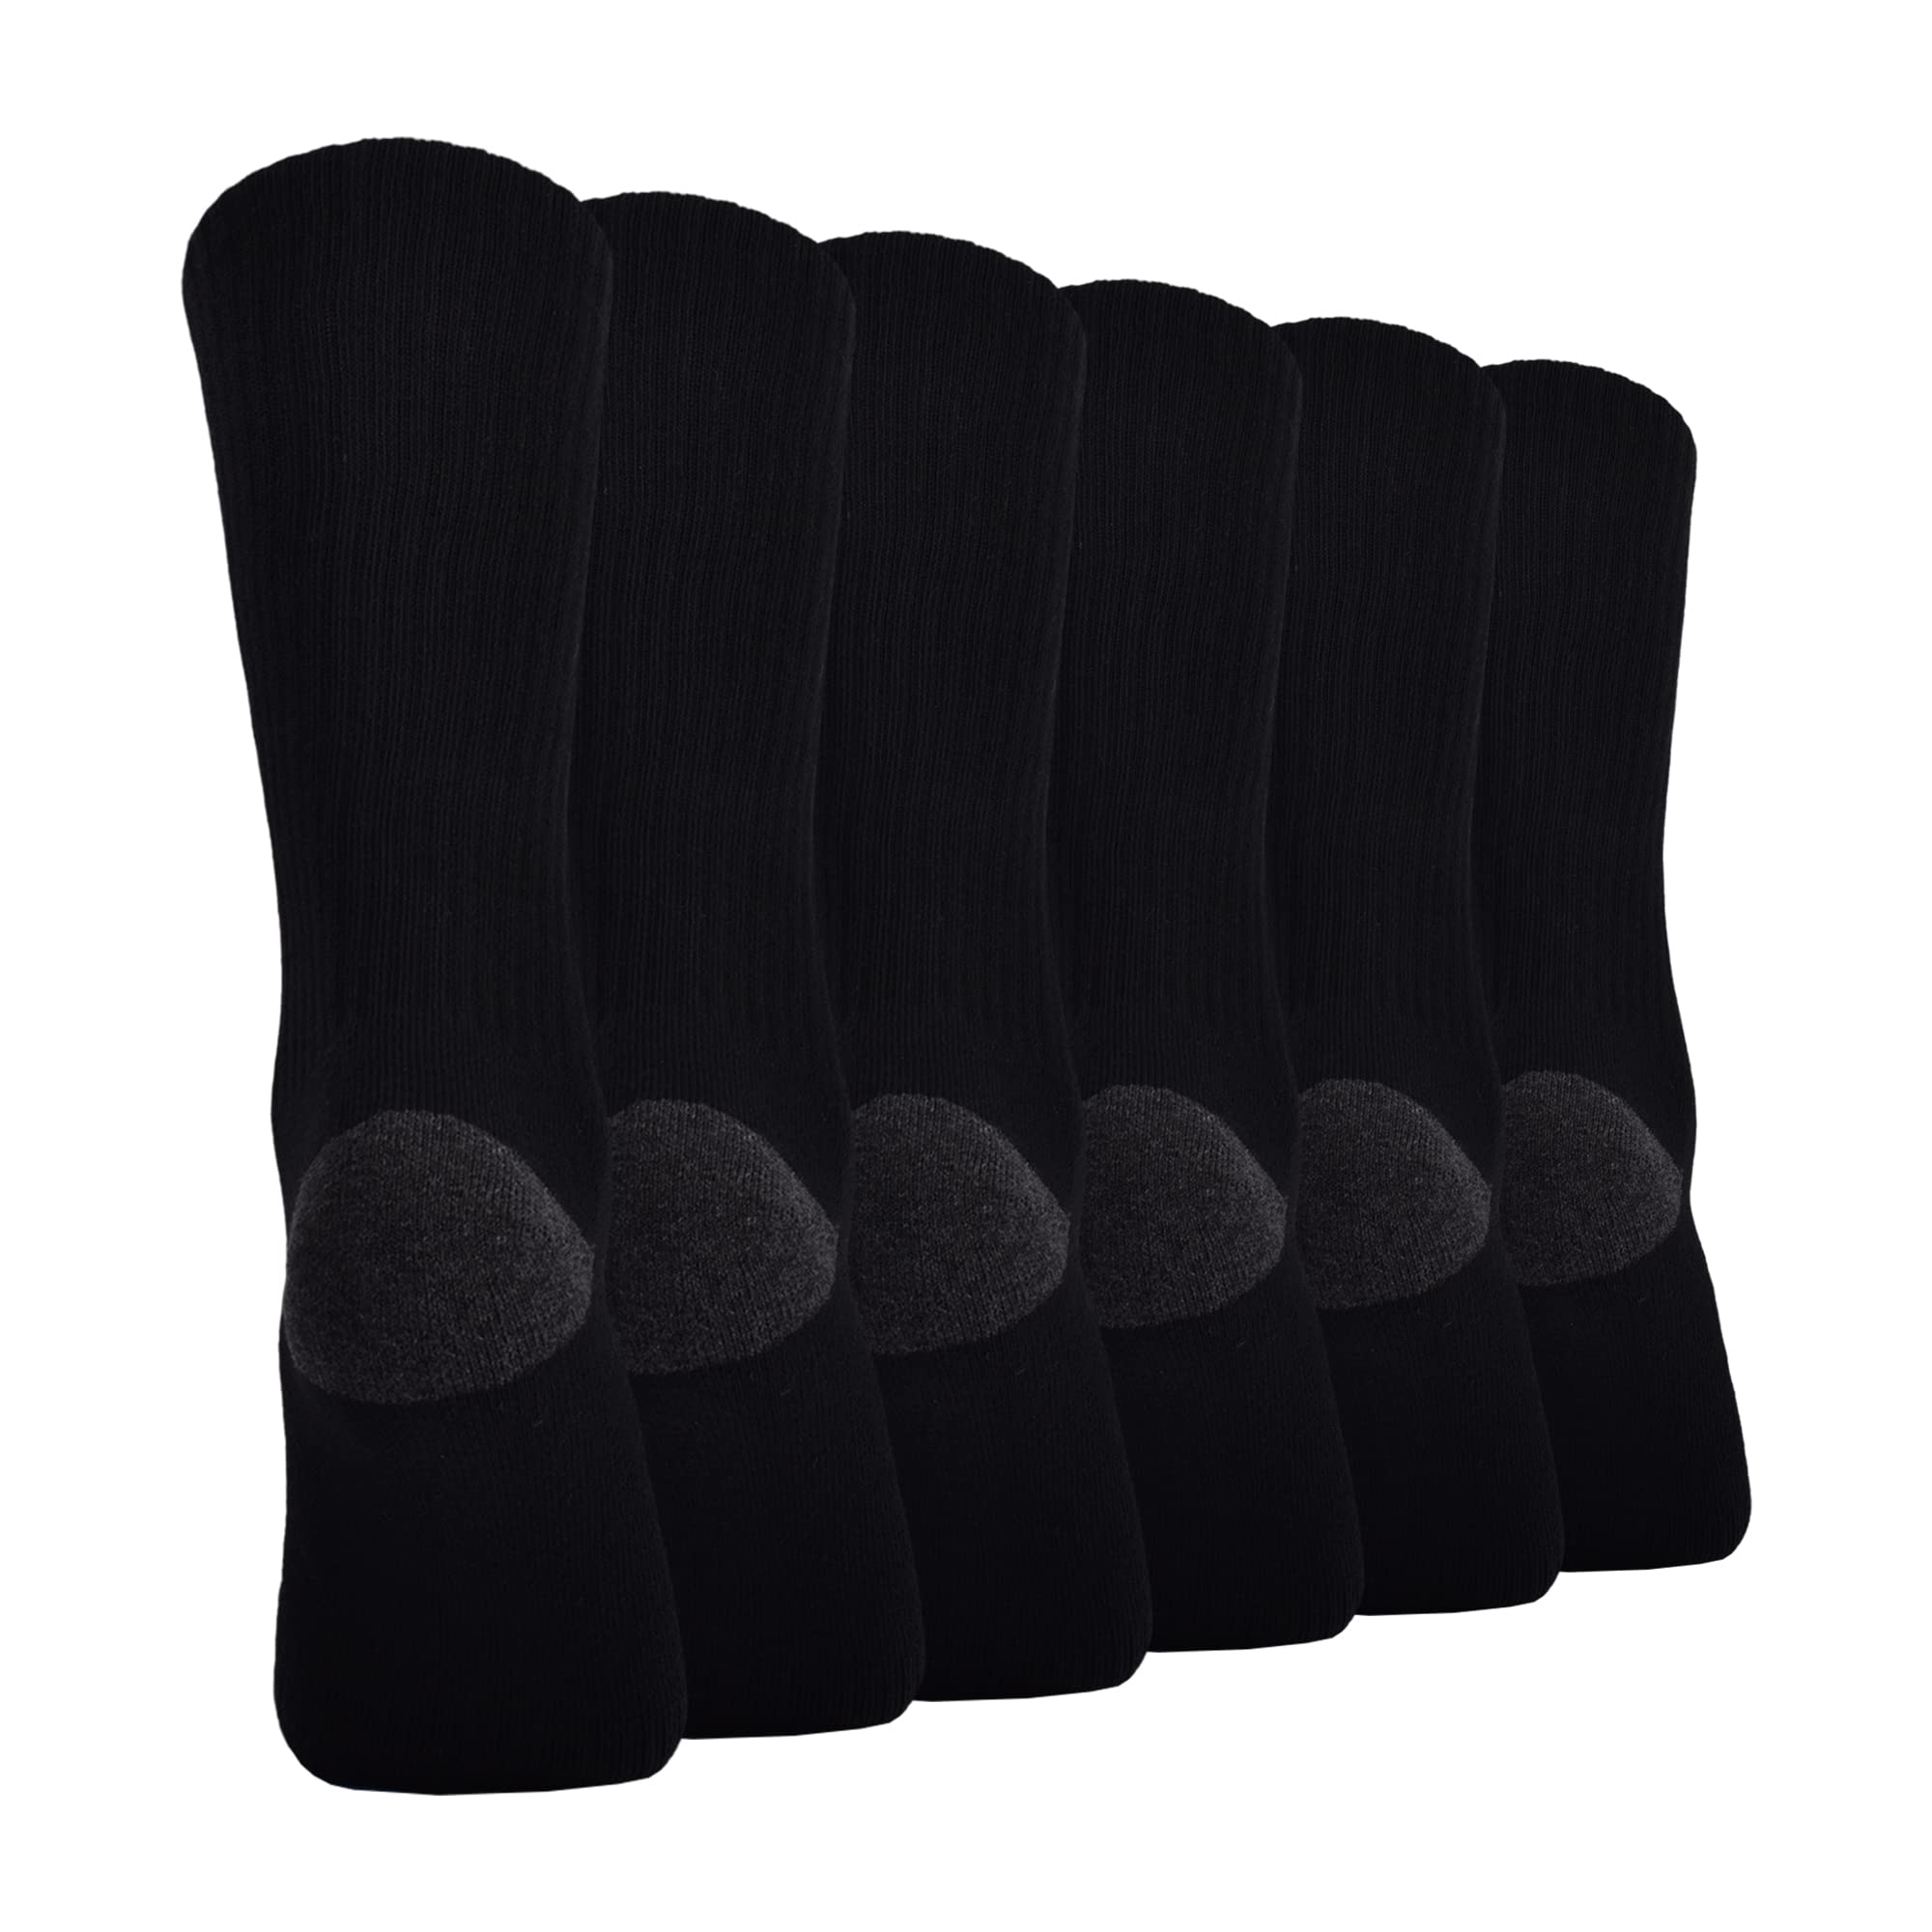 Timberland PRO mens Timberland Pro Men's Performance Crew Length 1/2 Cushion 6-pack Casual Socks, Black, Medium US